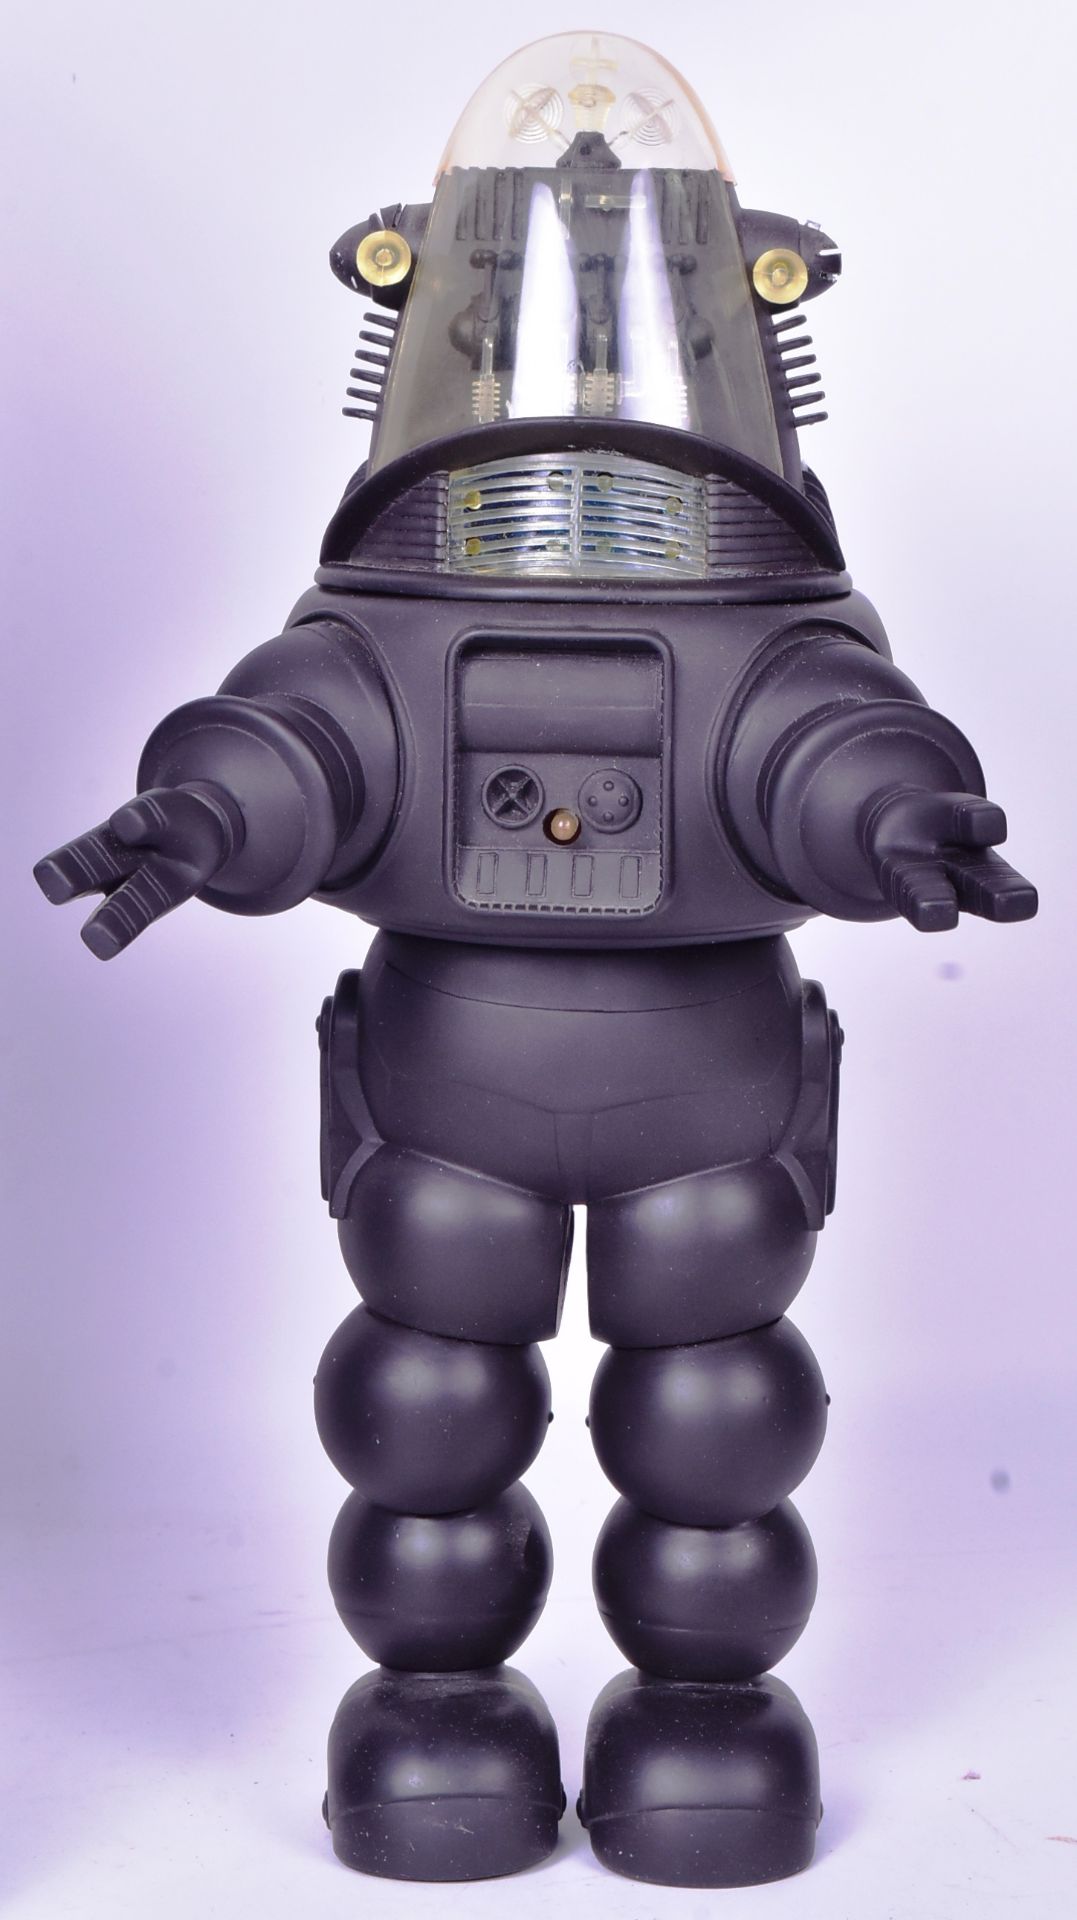 MASUDAYA - ROBBY THE ROBOT TALKING FIGURE - BATTERY OPERATED - Image 3 of 8